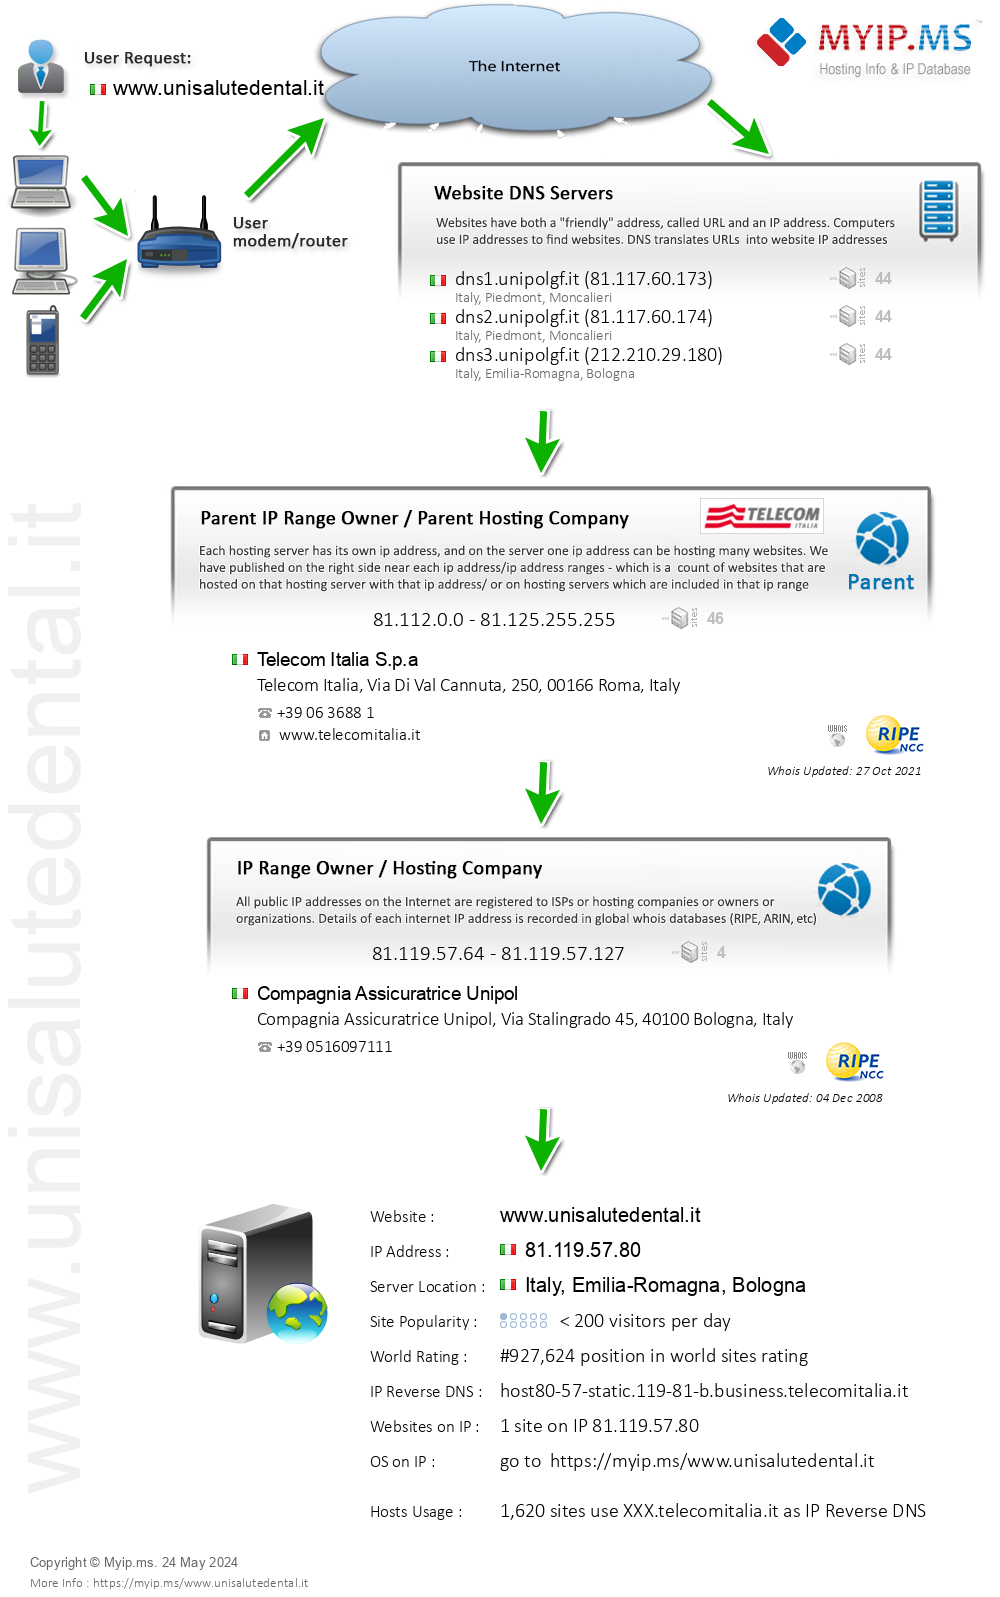 Unisalutedental.it - Website Hosting Visual IP Diagram